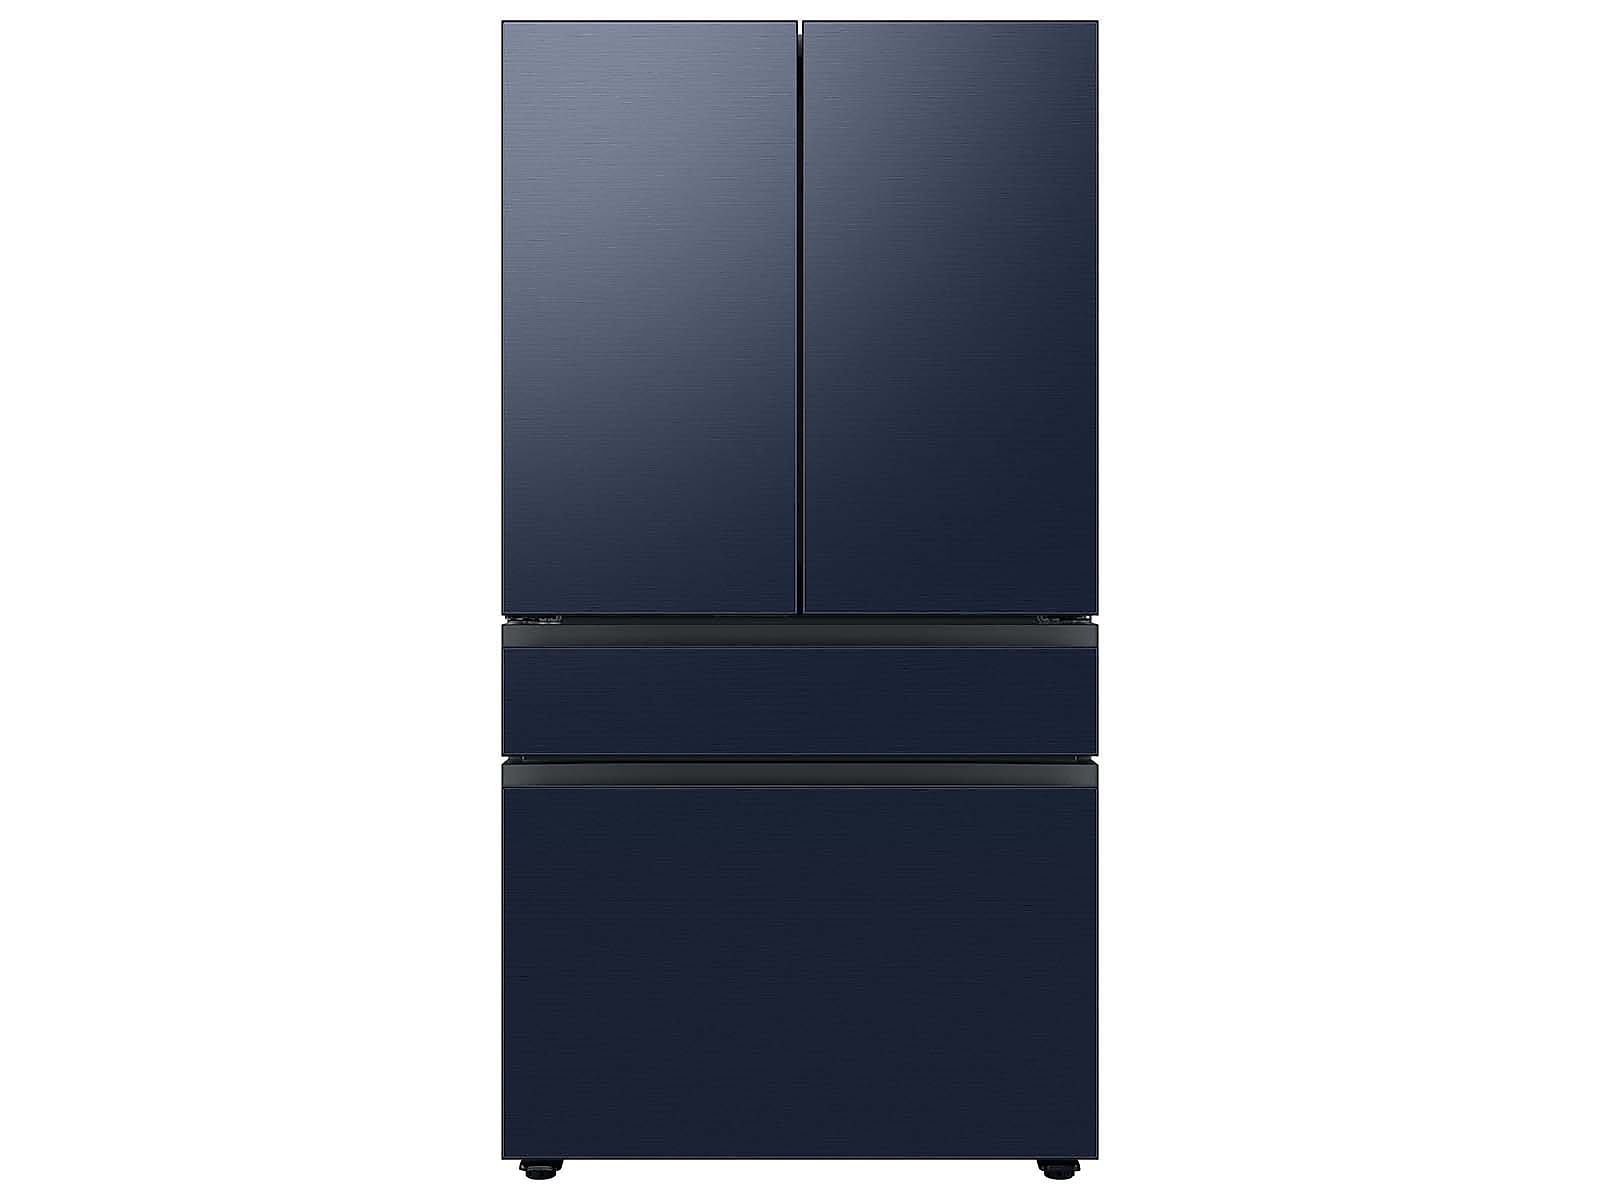 Samsung Bespoke 4-Door French Door Refrigerator in Navy Blue Steel with Stainless Steel Middle Panel (29 cu. ft.) with Customizable Door Panel Colors and Beverage Center™ in Navy Steel with Stainless Steel Middle Panel